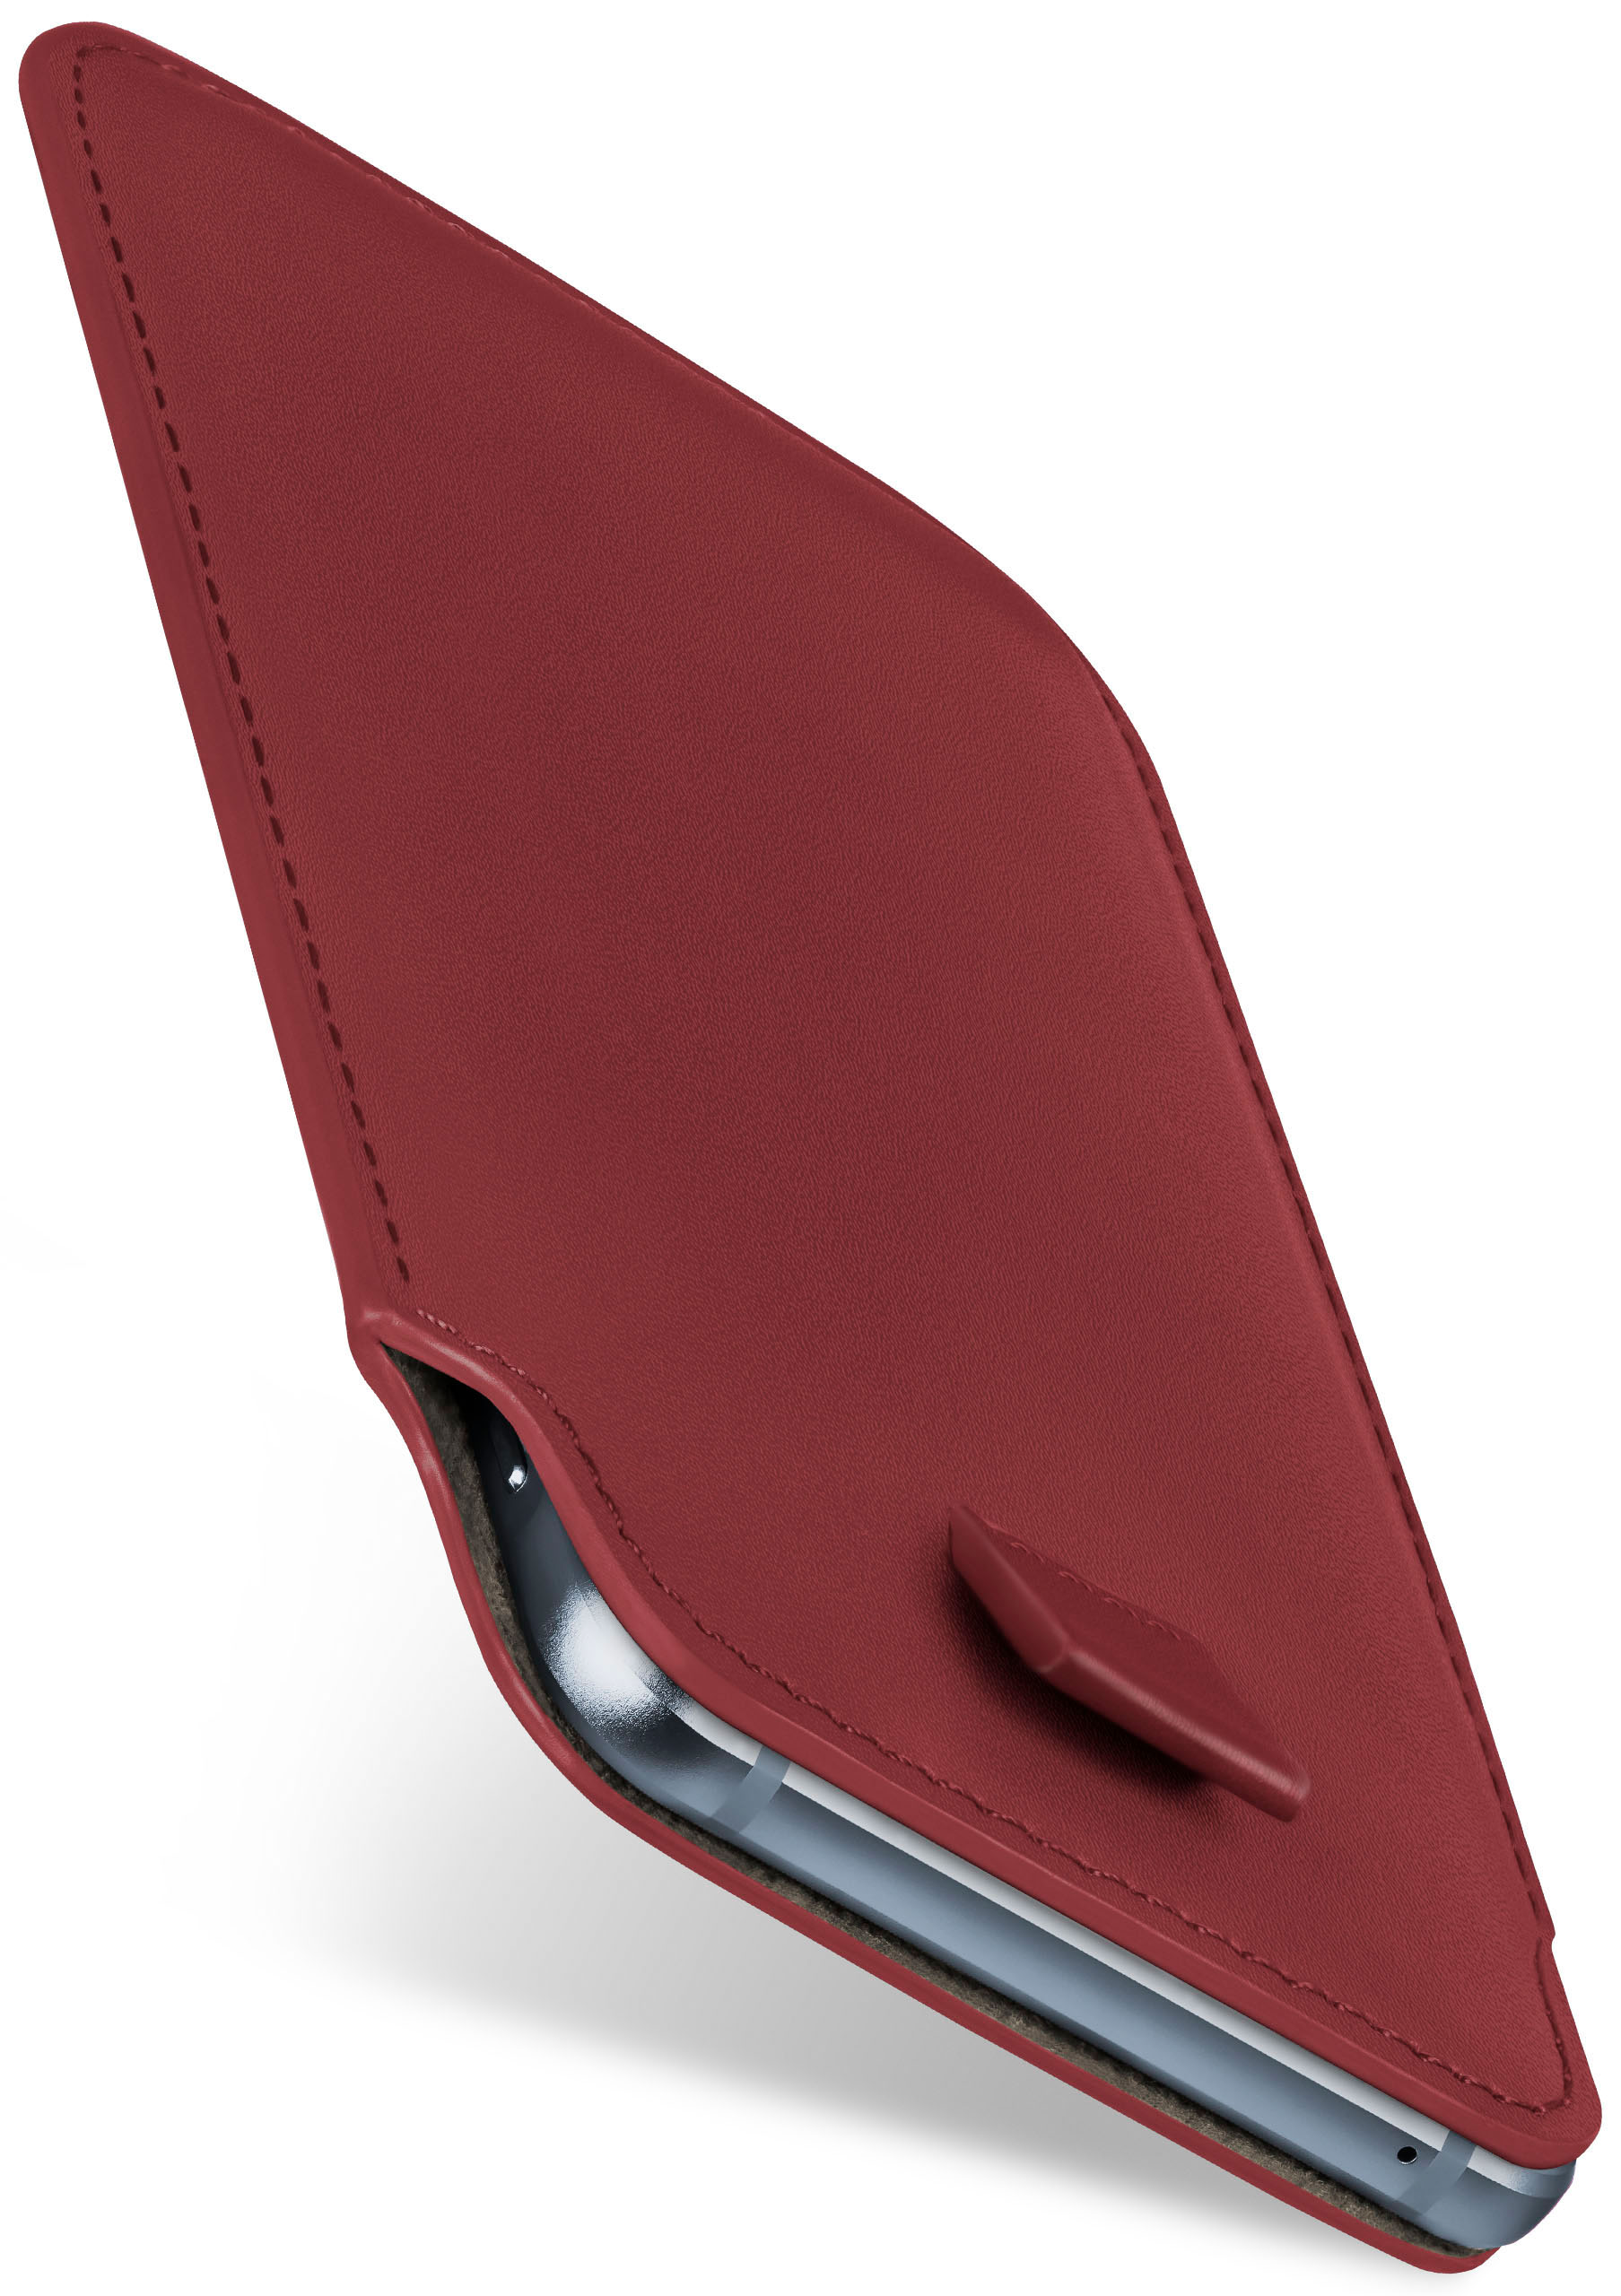 MOEX Slide Case, Full X LG, Maroon-Red Power, Cover